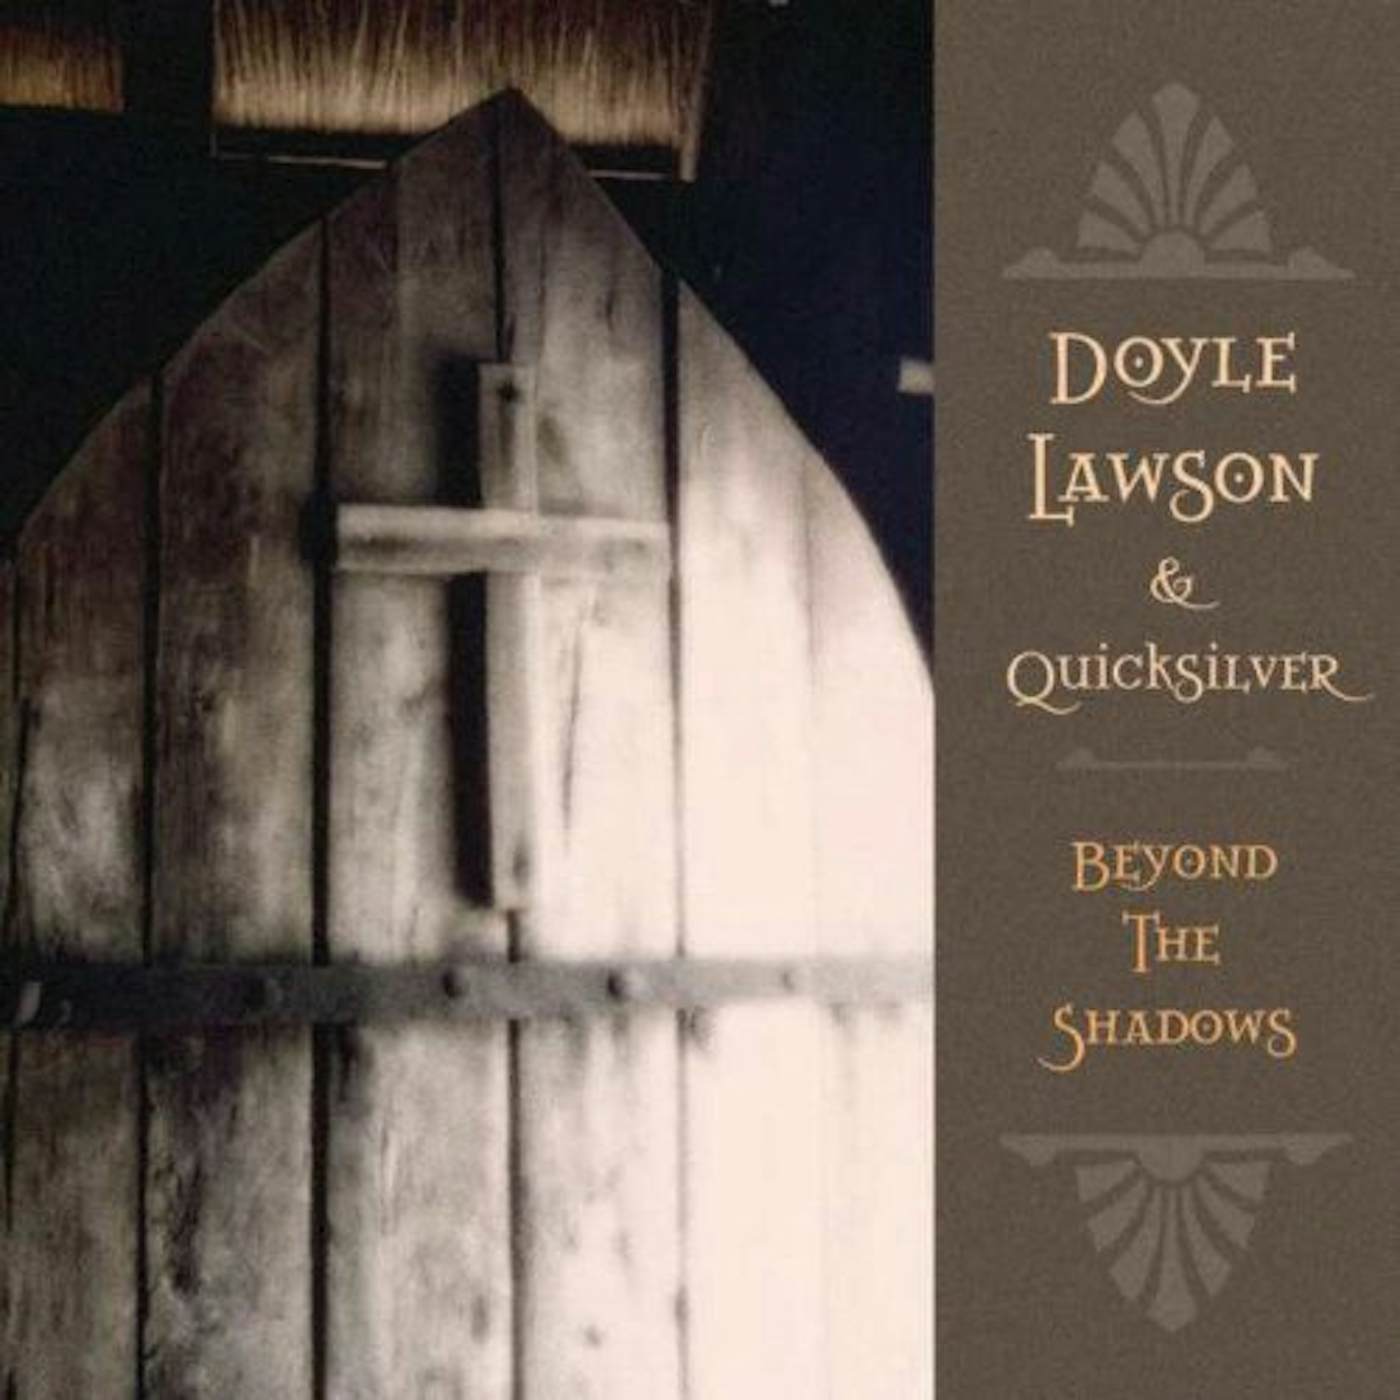 Doyle Lawson & Quicksilver BEYOND THE SHADOWS CD